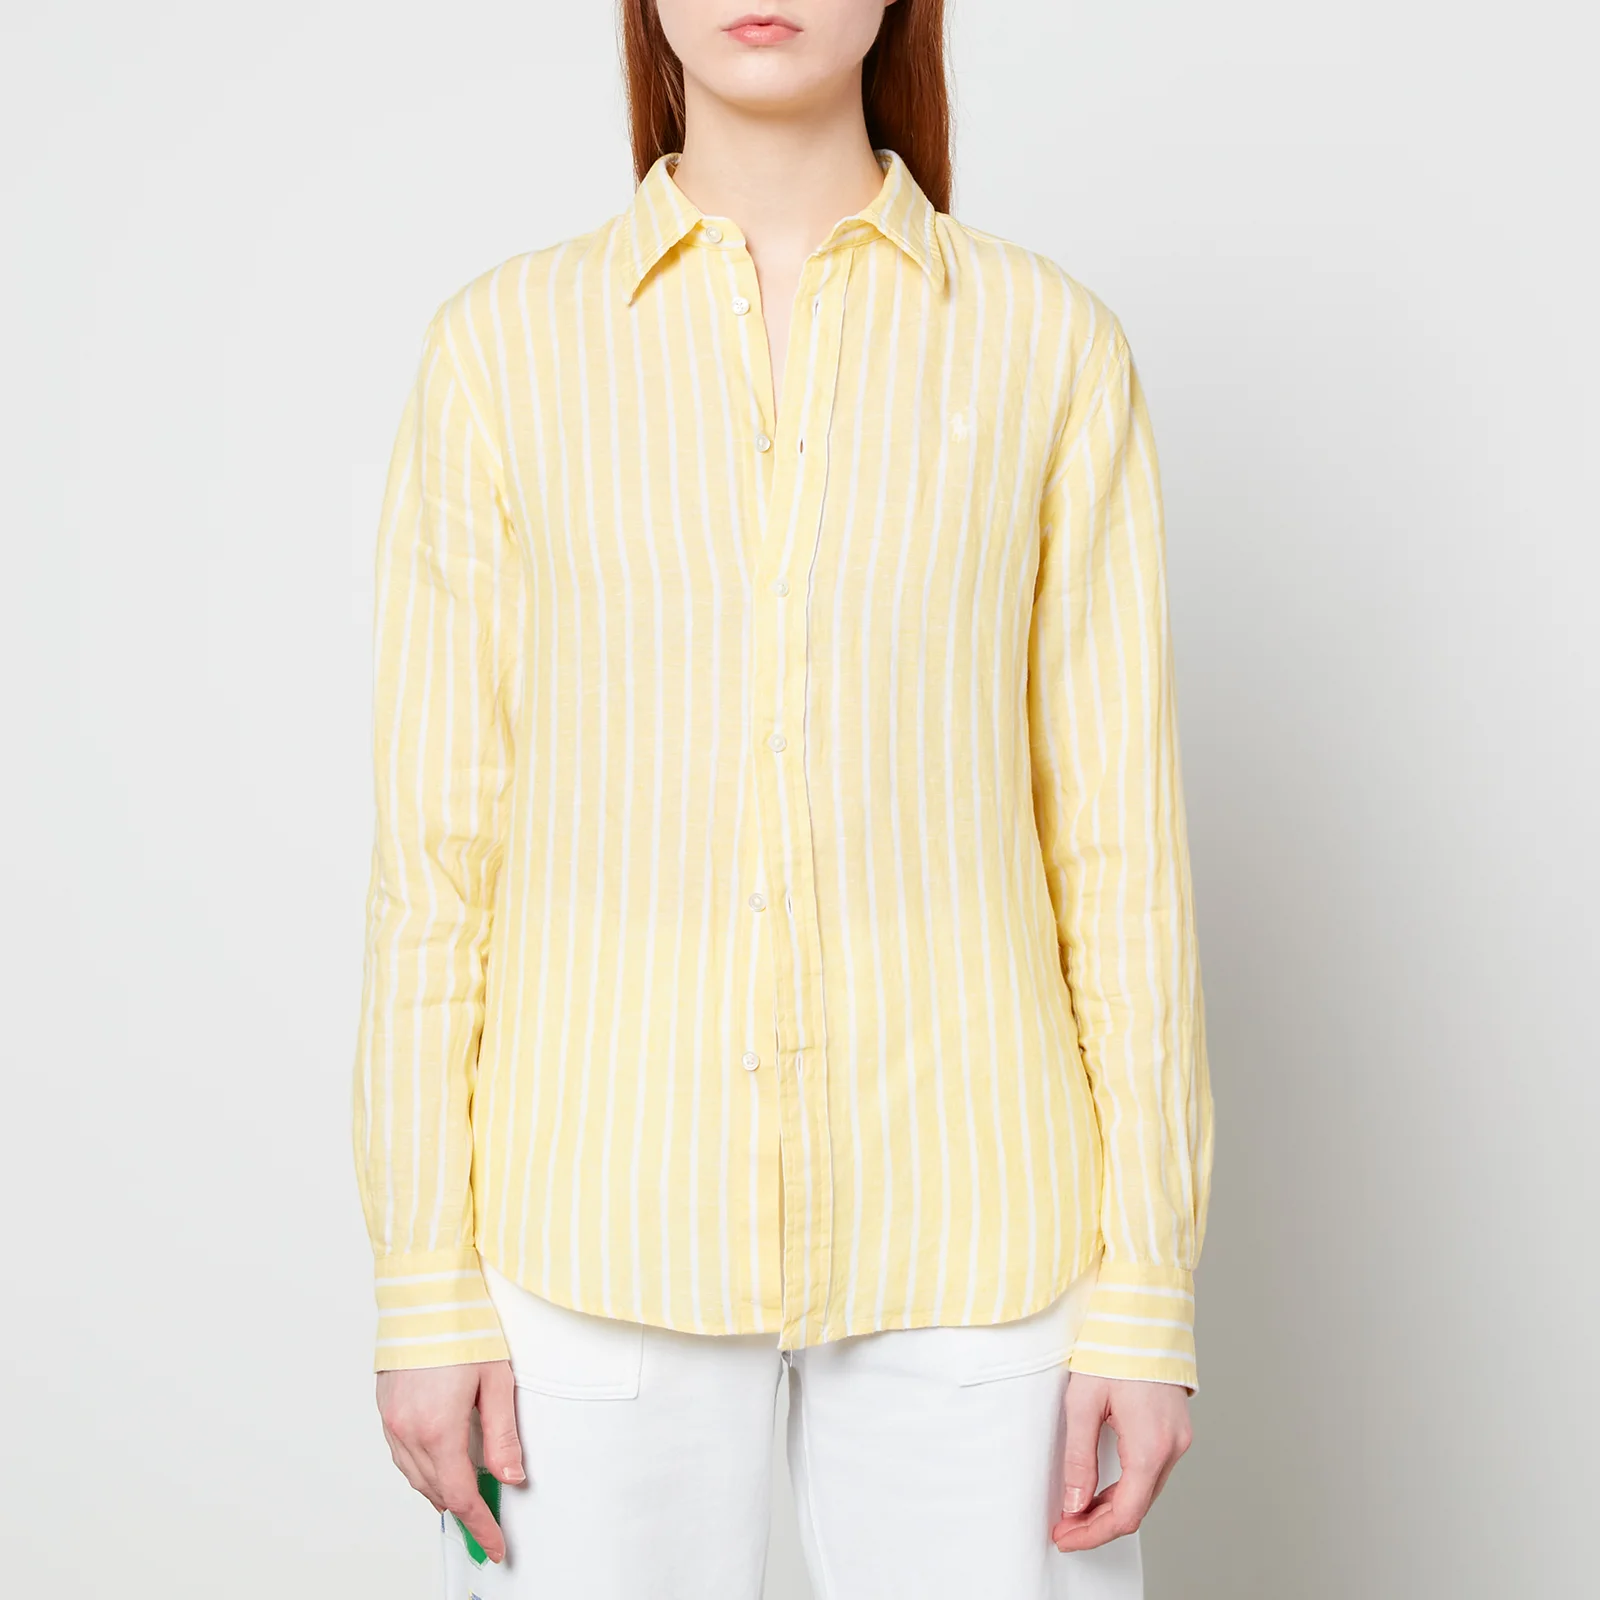 Polo Ralph Lauren Women's Relaxed Shirt - 1178 Oasis Yellow/White Image 1